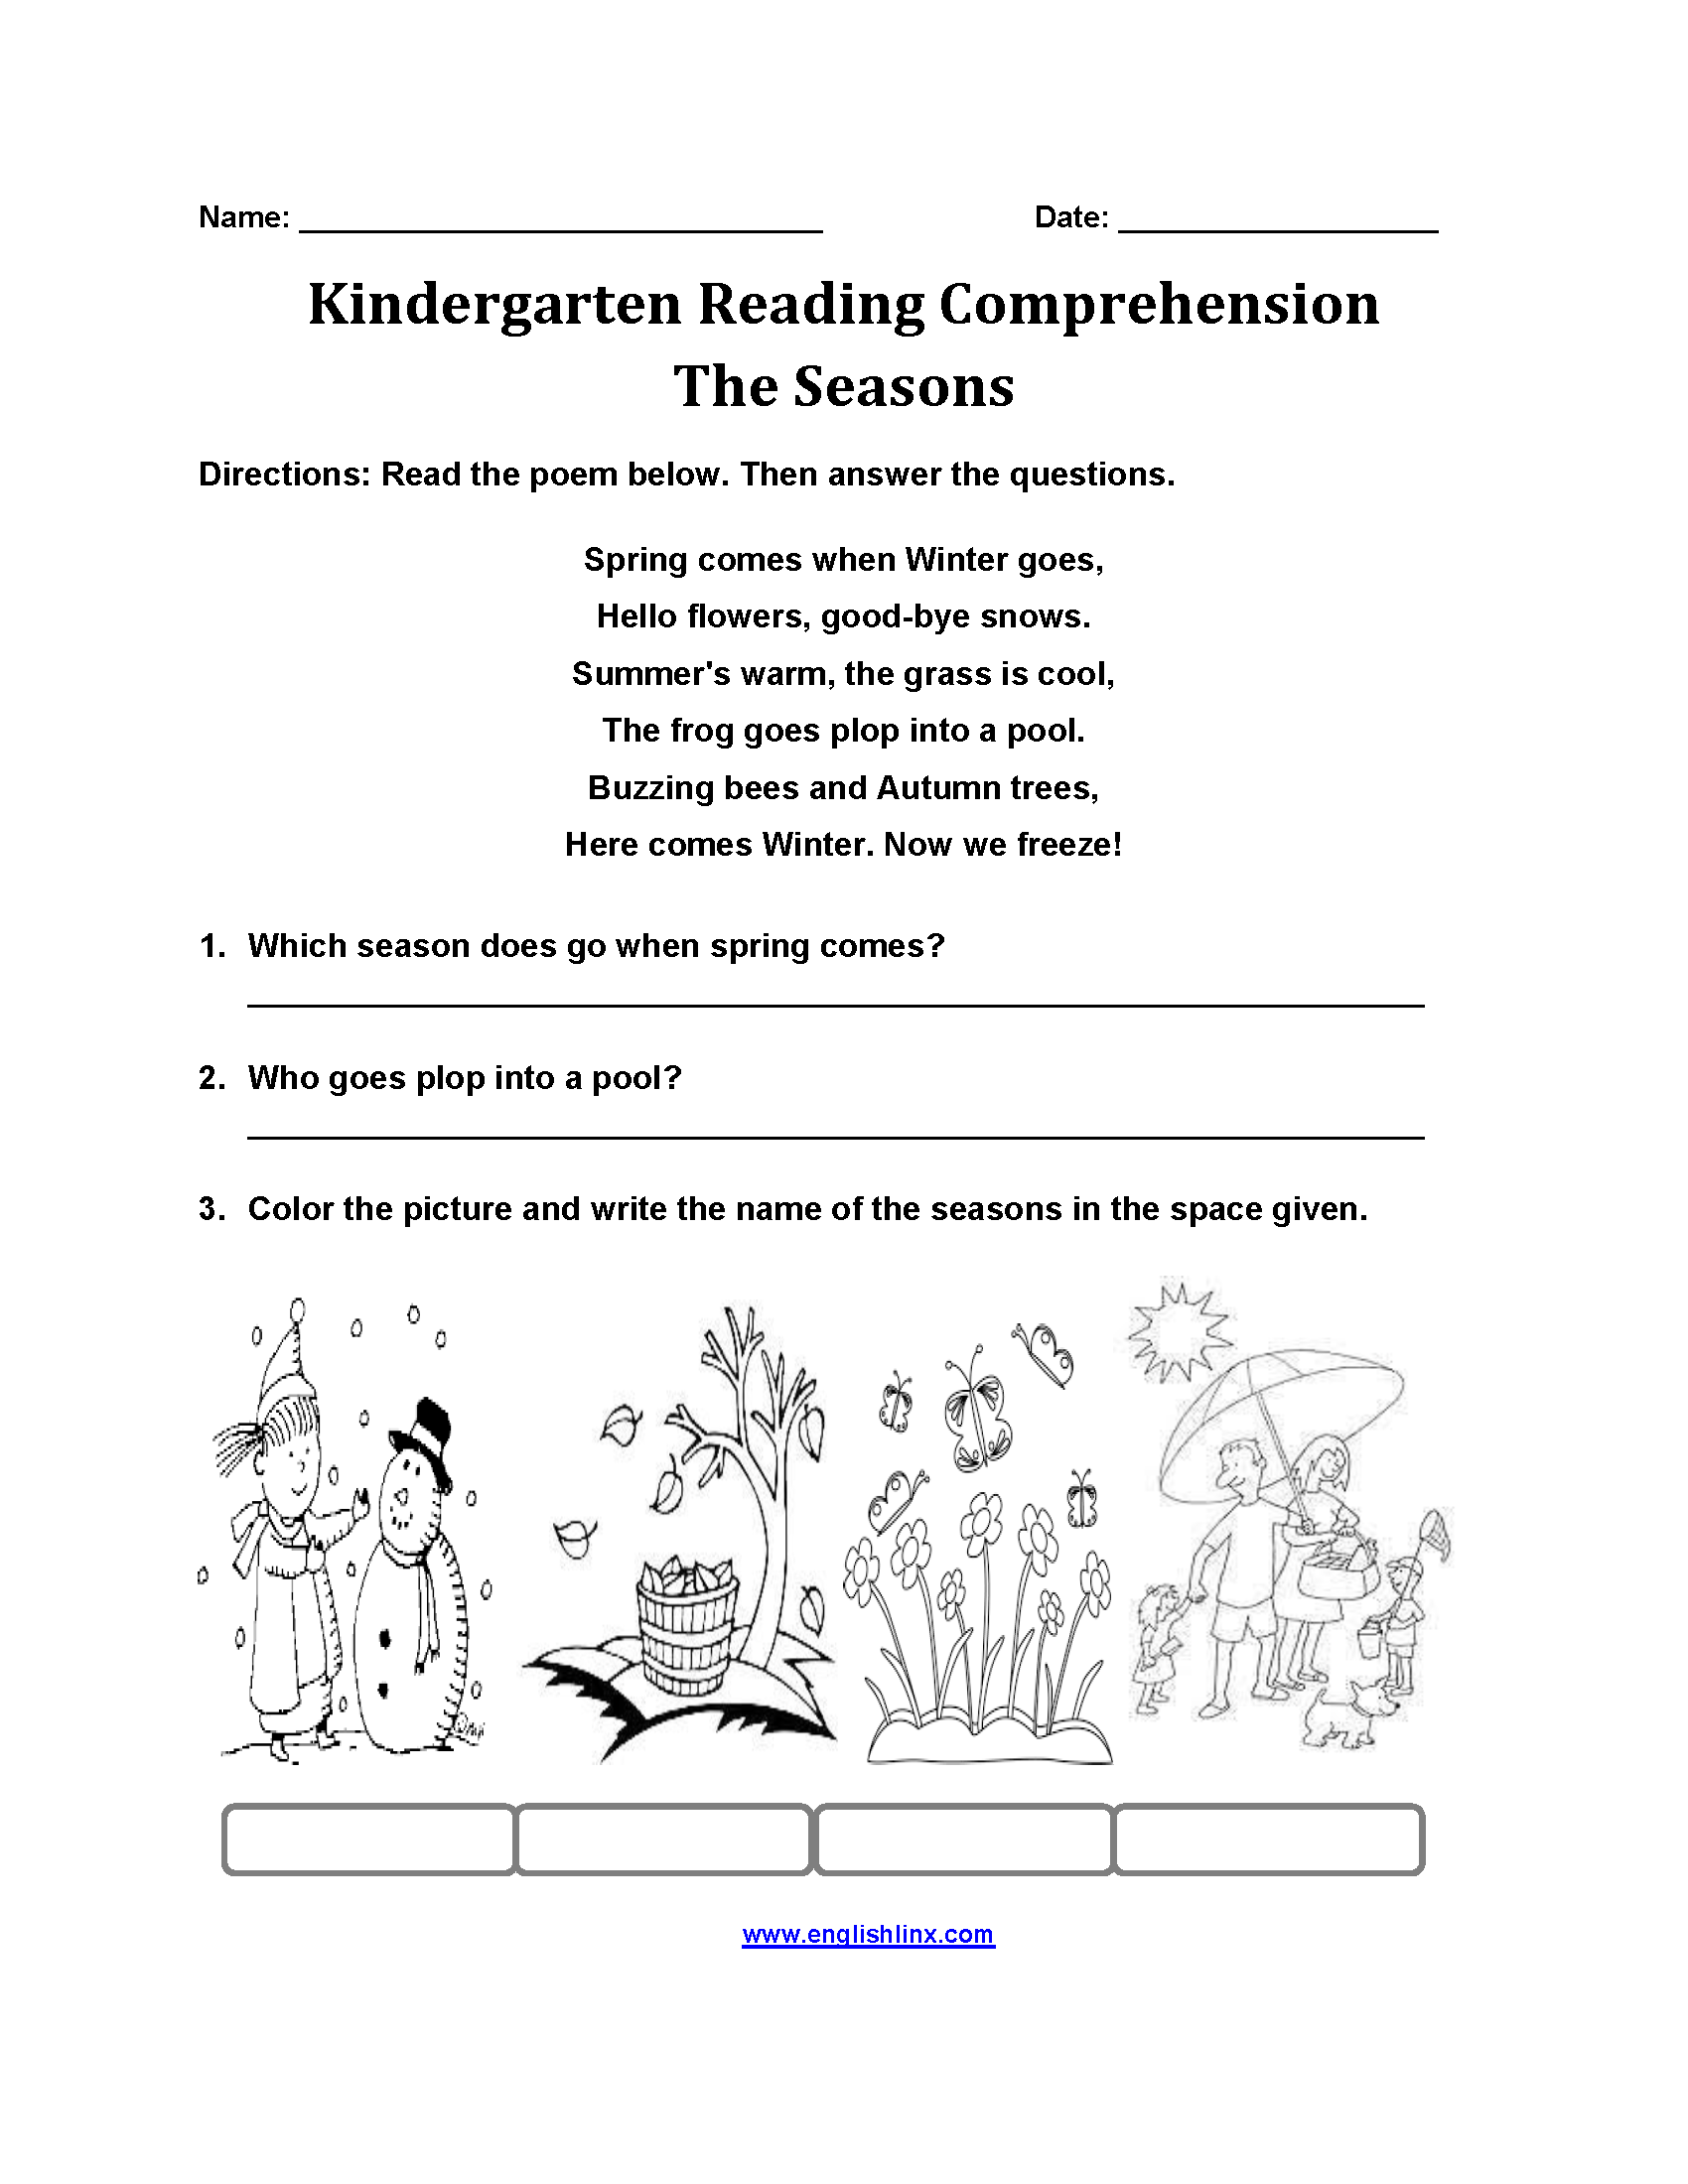 The Seasons Kindergarten Reading Comprehension Worksheets